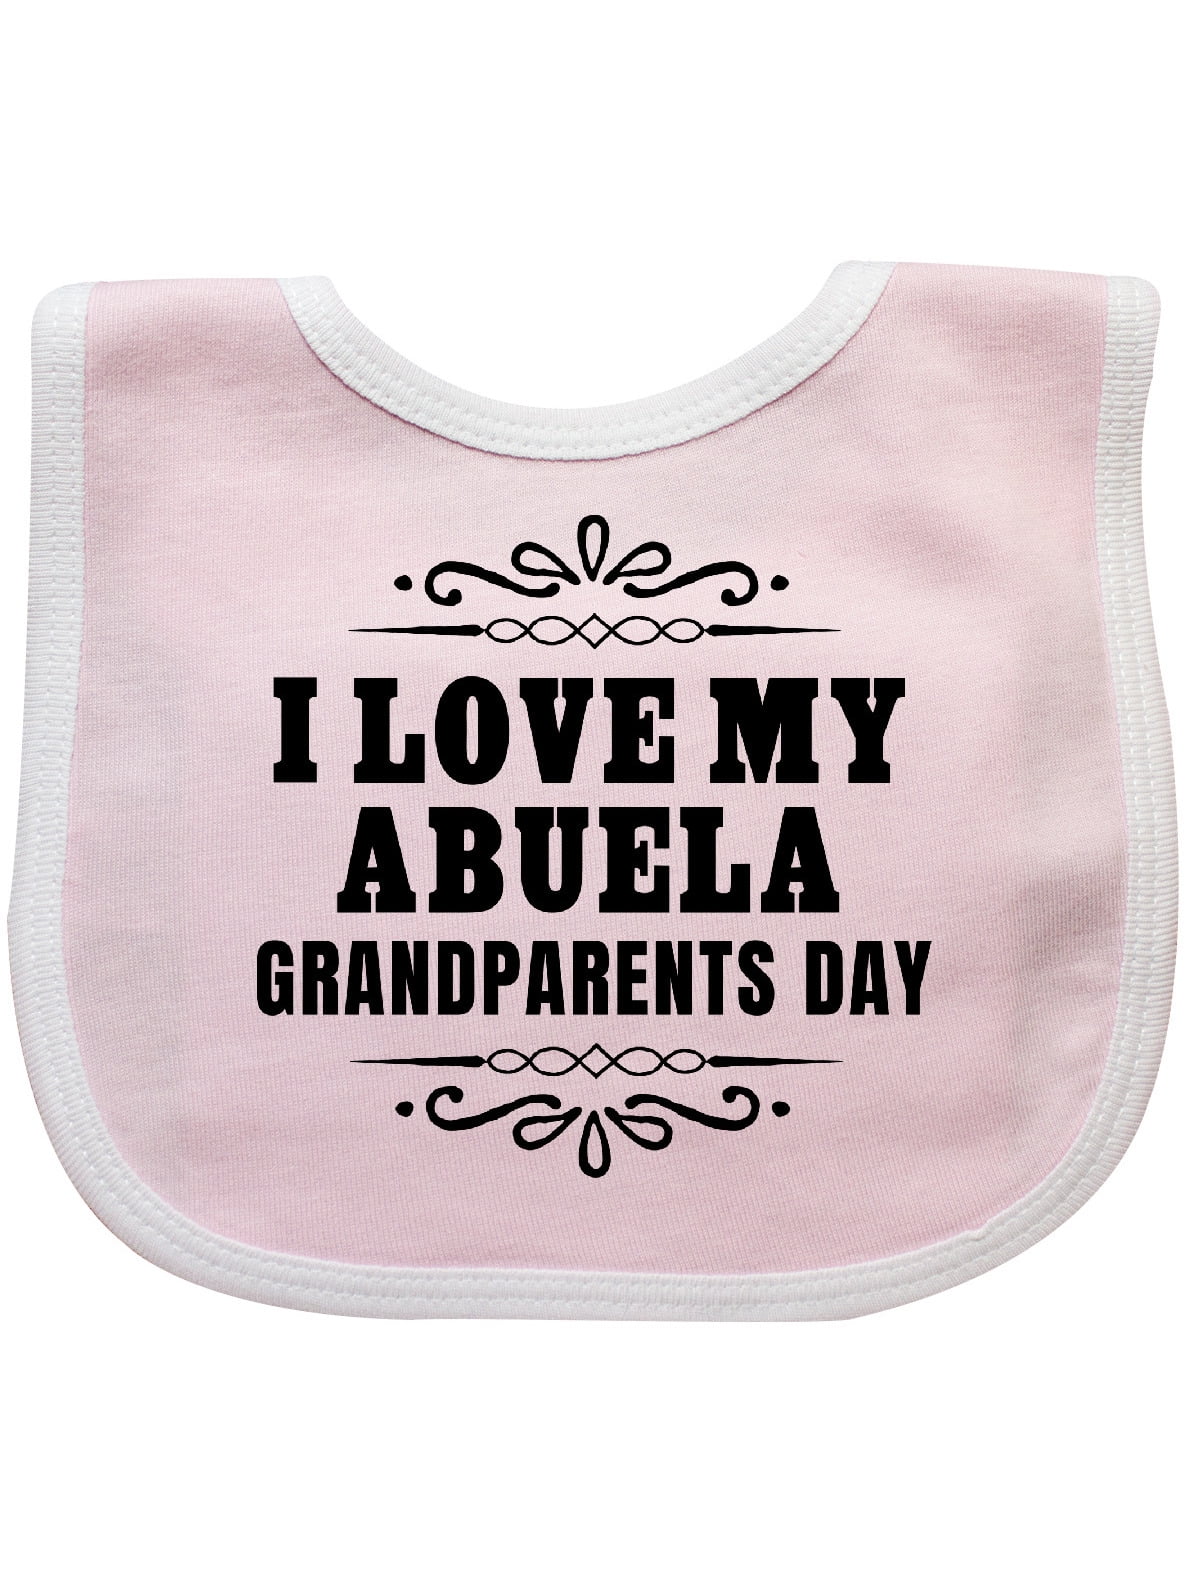 Grandparents Day I Love My Abuela Baby Bib - Walmart.com - Walmart.com